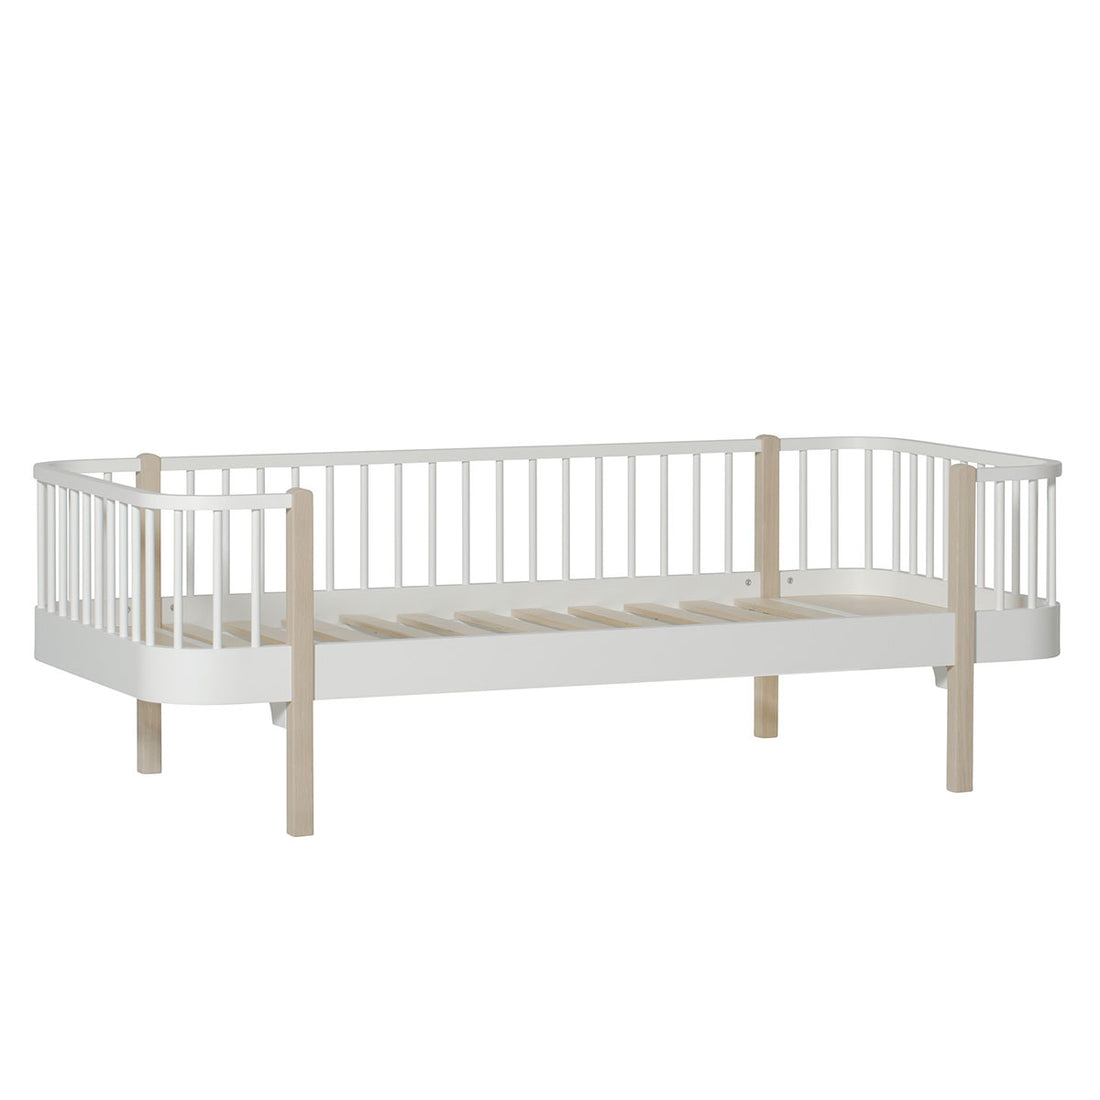 oliver-furniture-wood-day-bed-white-oak- (2)